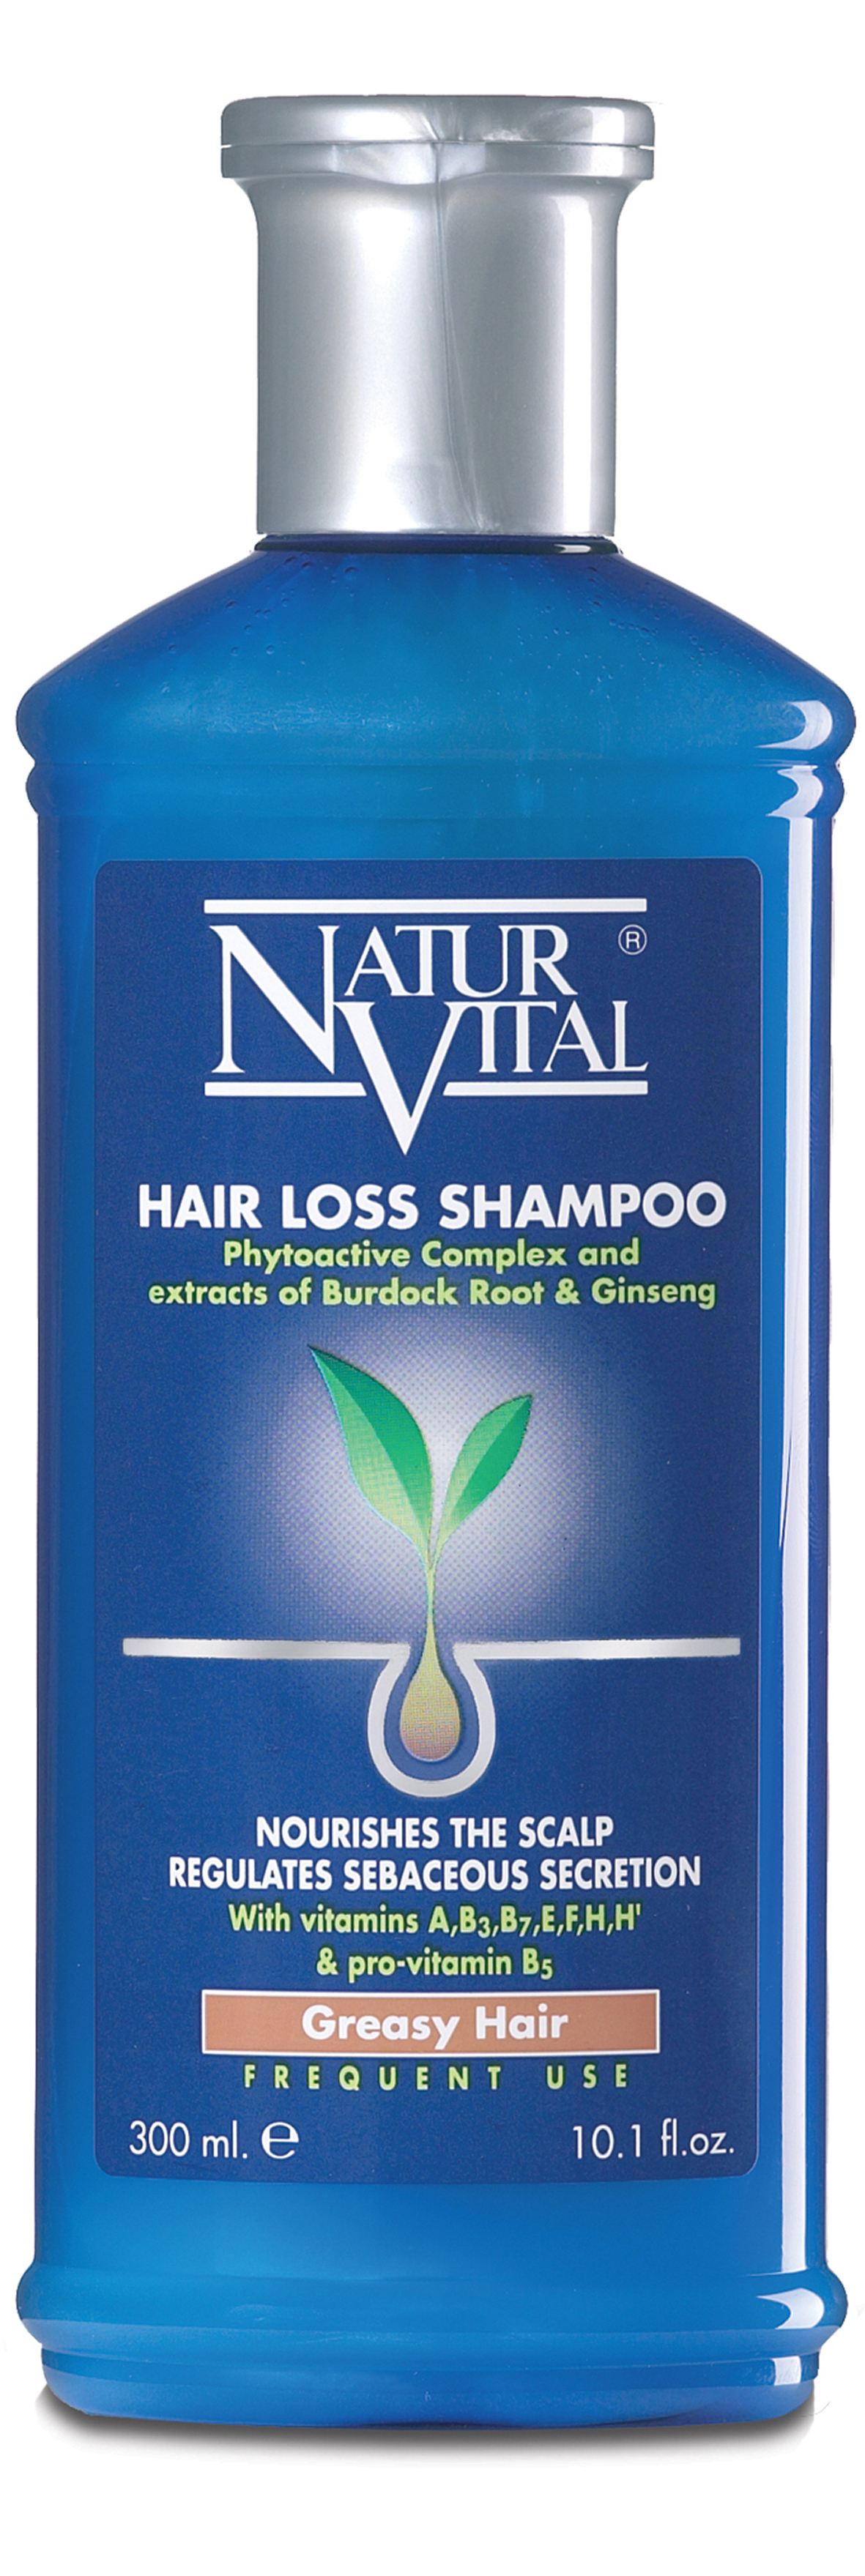 NaturVital hair loss shampoo